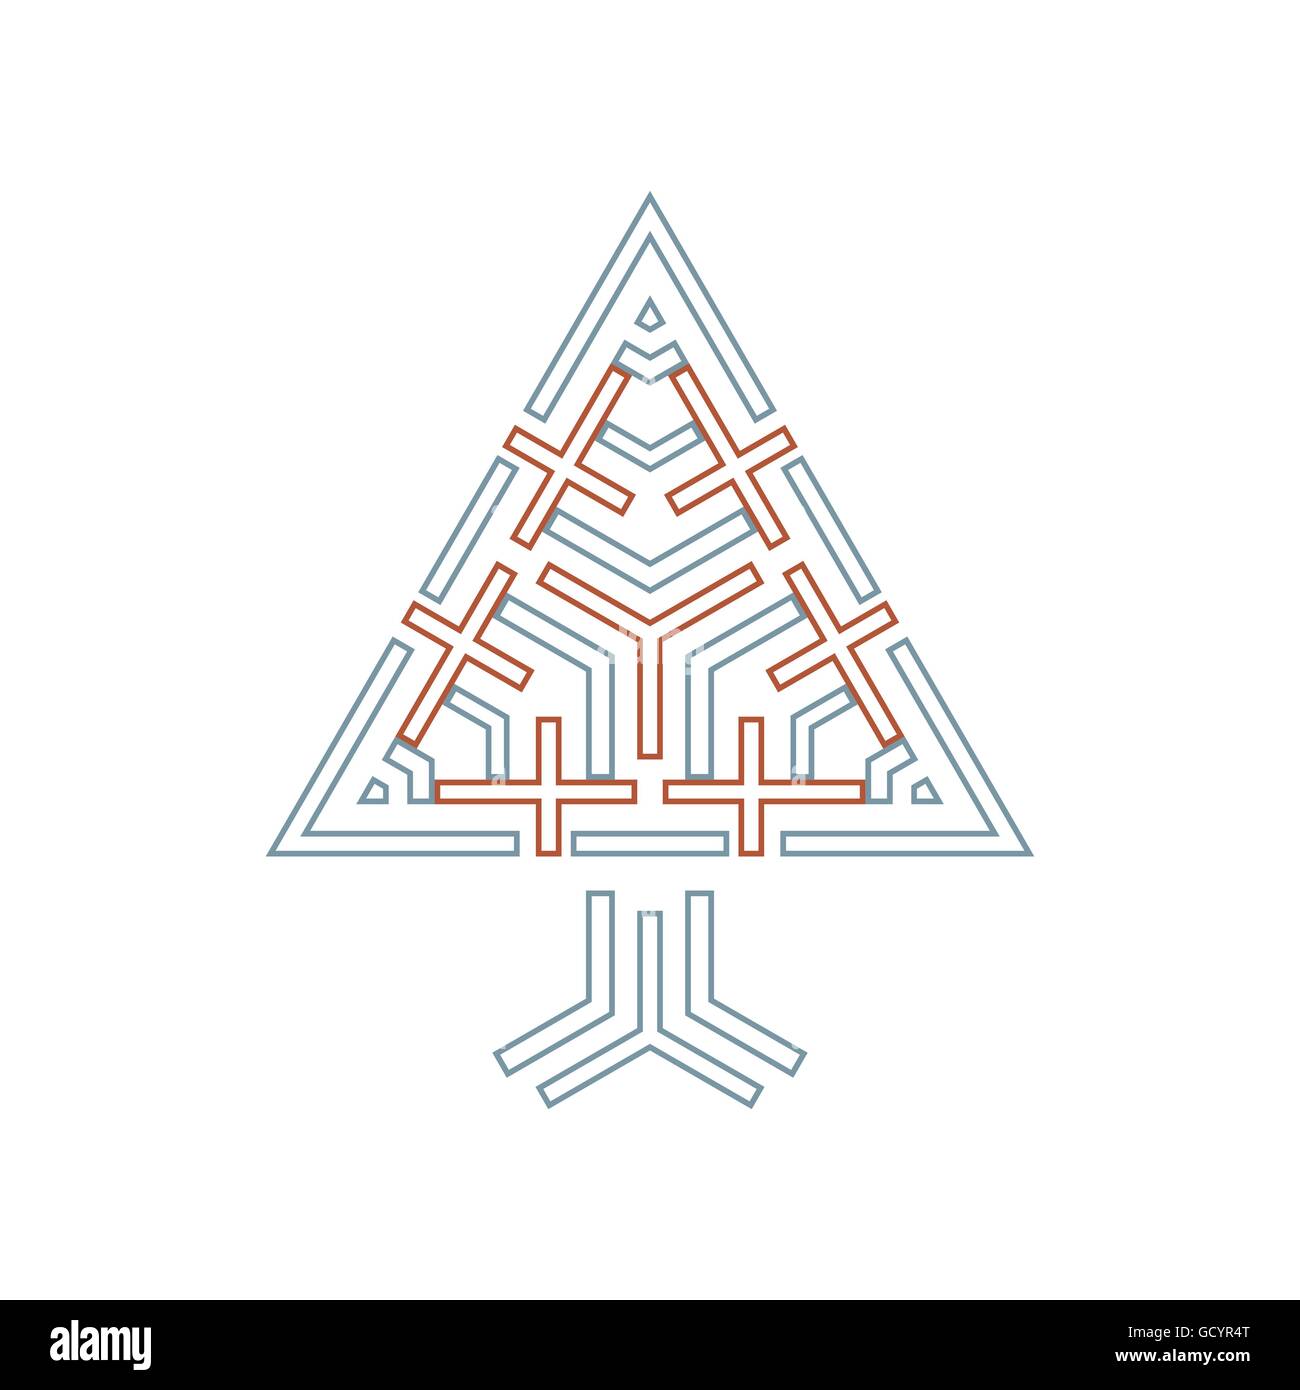 Dreieck Baum Schild mit kreuzen abstrakten Religion Symbol Vektor-illustration Stock Vektor